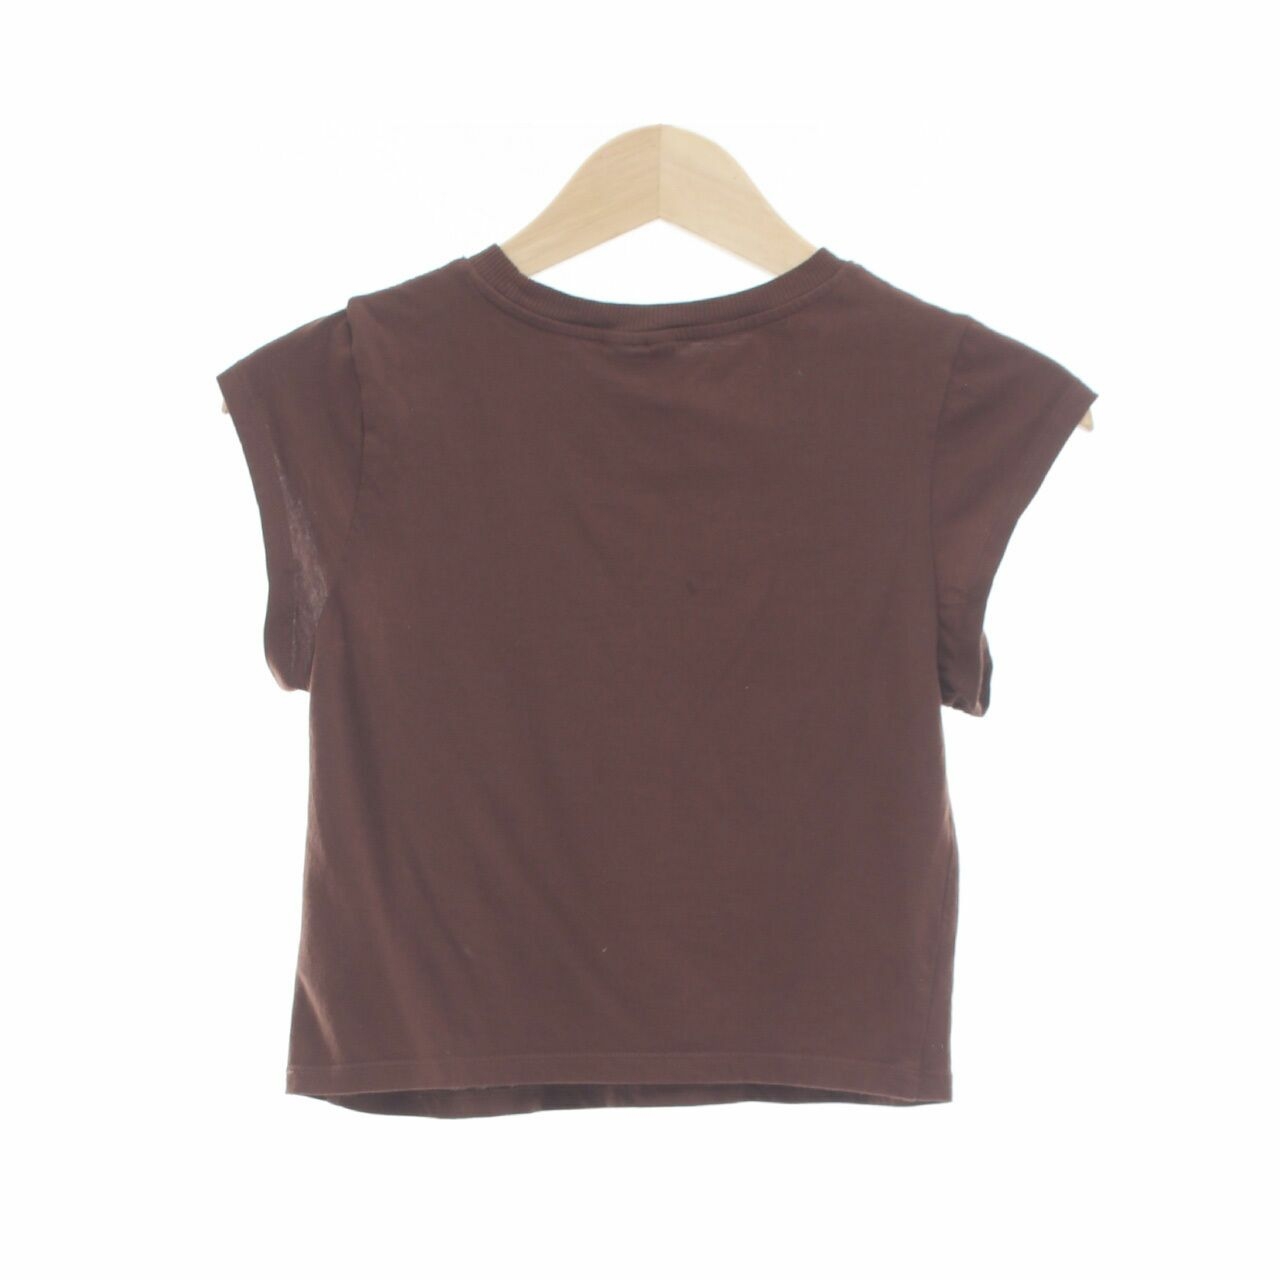 H&M Dark Brown T-Shirt